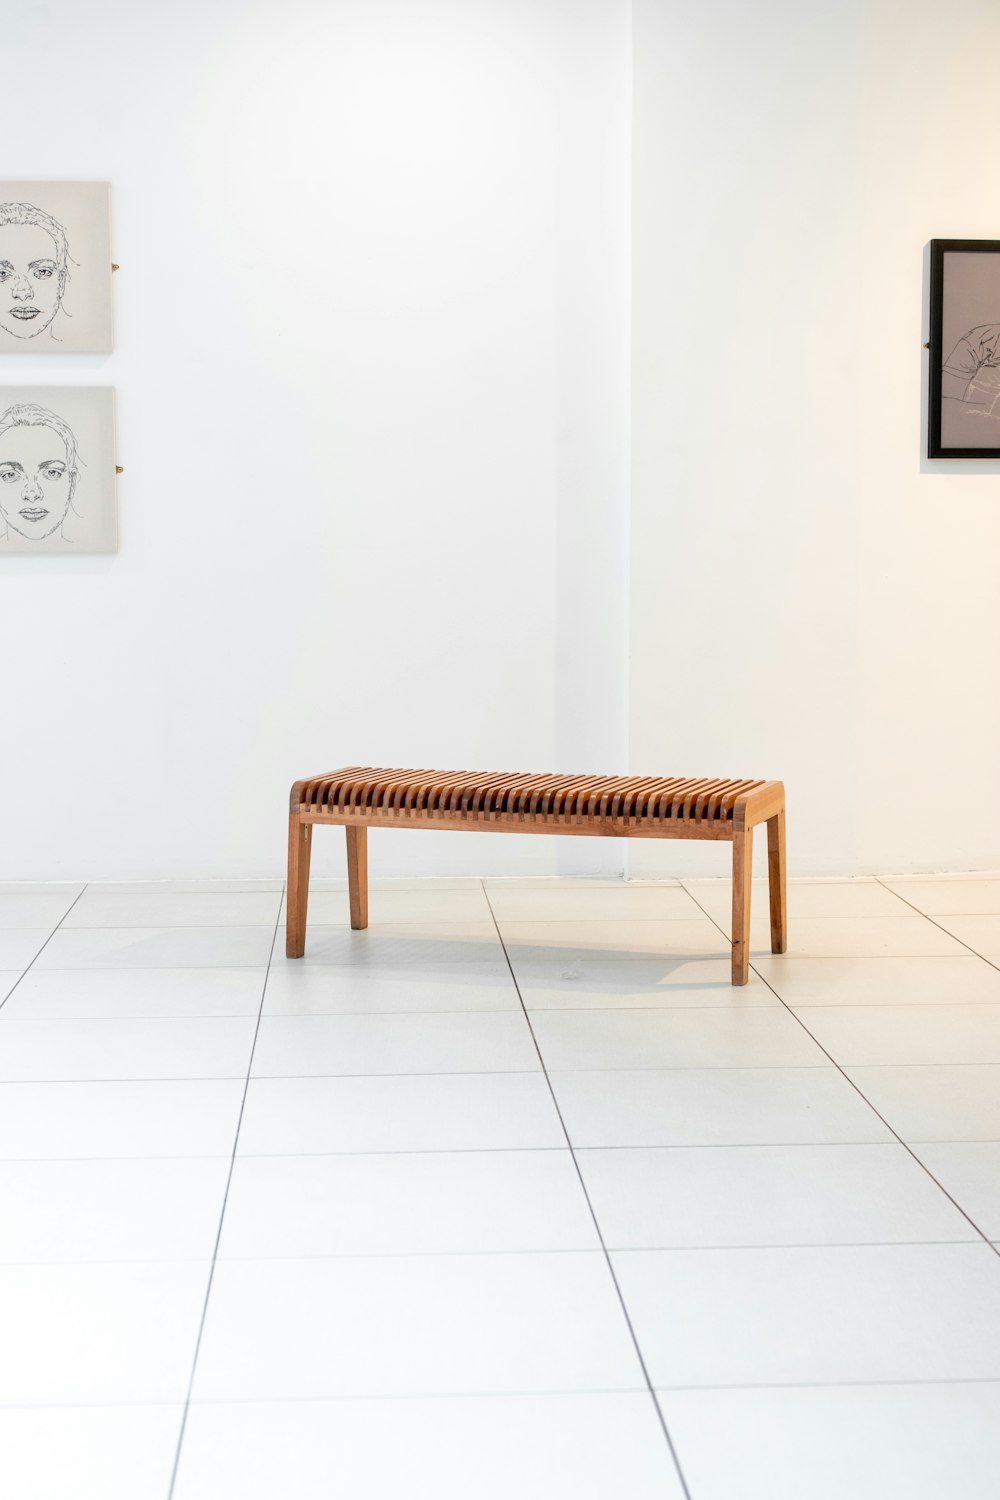 rectangular brown wooden stool